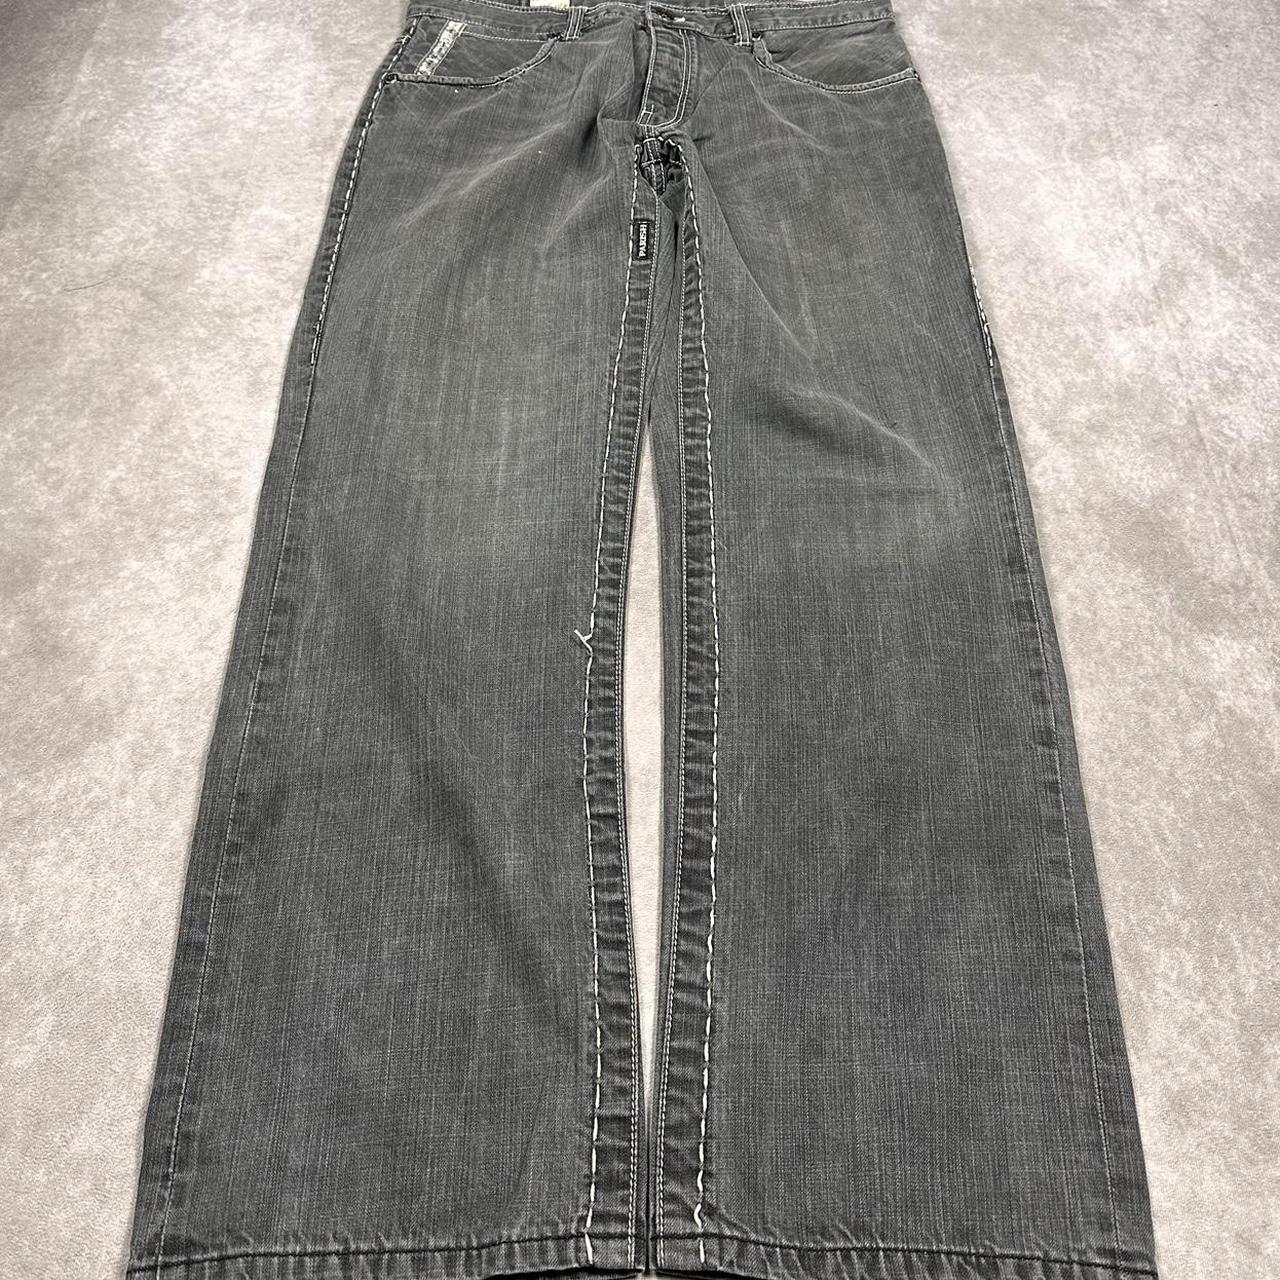 Y2K Baggy Grunge Style Jeans Super Fiya Faded Grey... - Depop